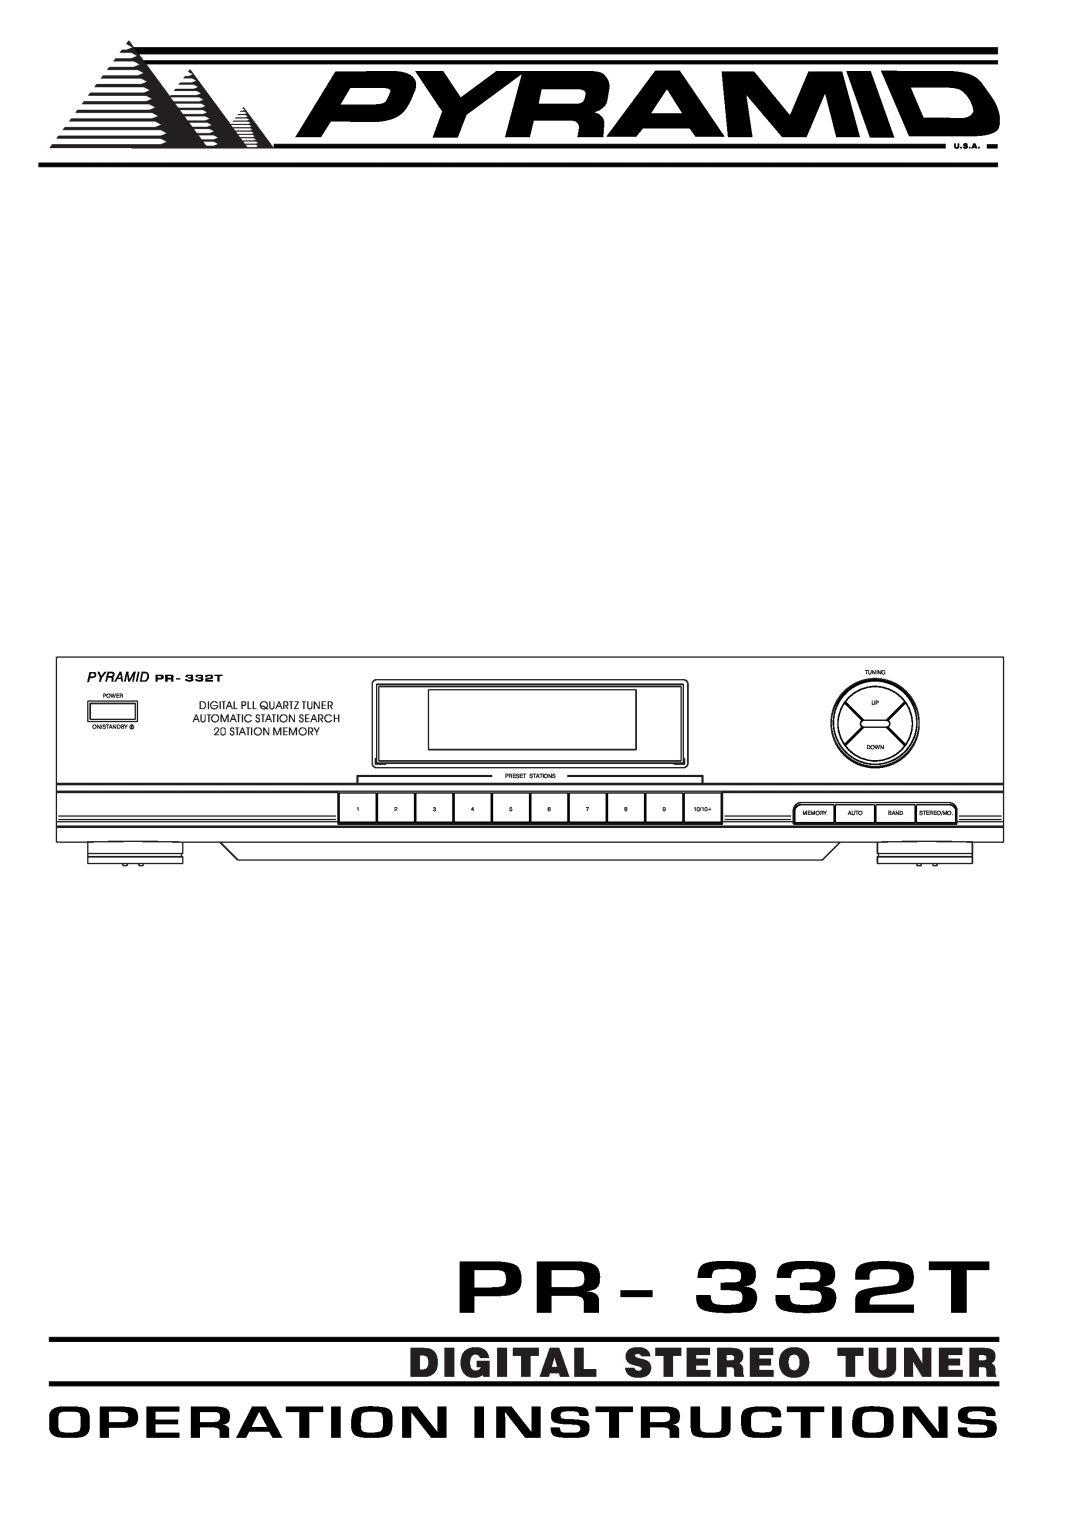 Pyramid Technologies PR-332T manual Digital Stereo Tuner, Yramid, Automatic Station Search, Station Memory, U.S.A, Power 